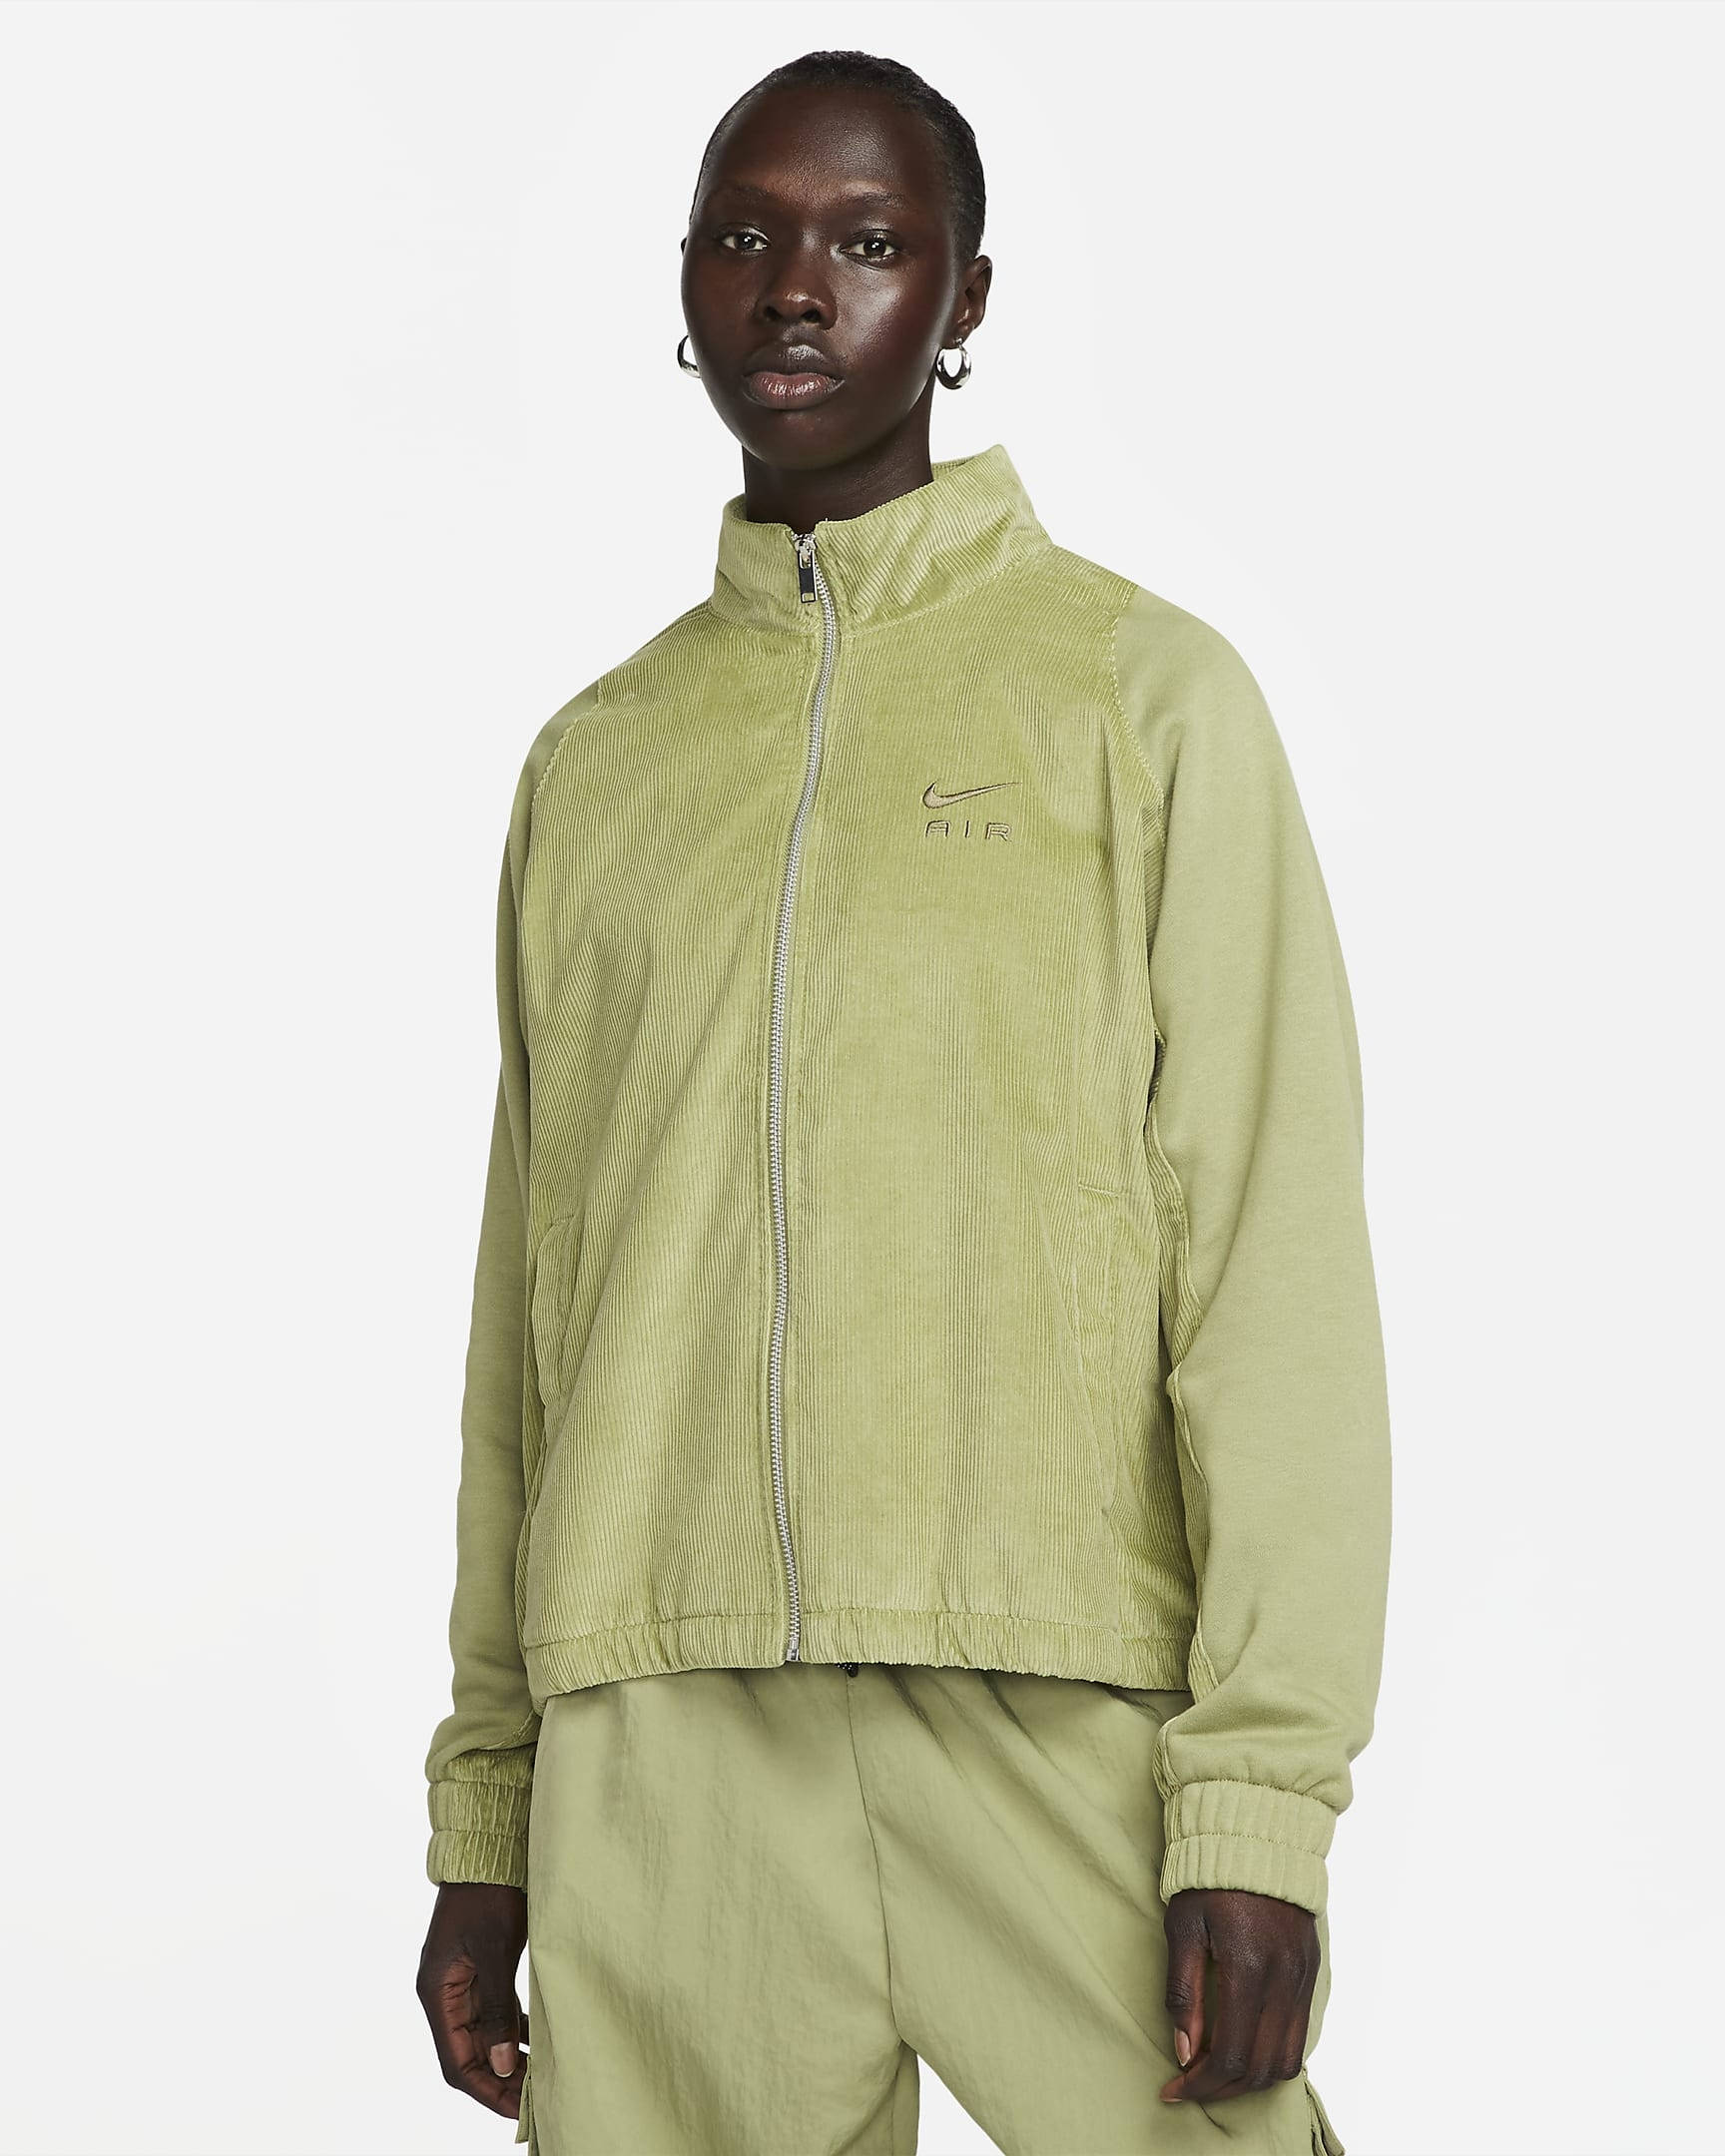 Nike Air Corduroy Fleece Full-Zip Jacket - Medium Olive | The Sole Supplier